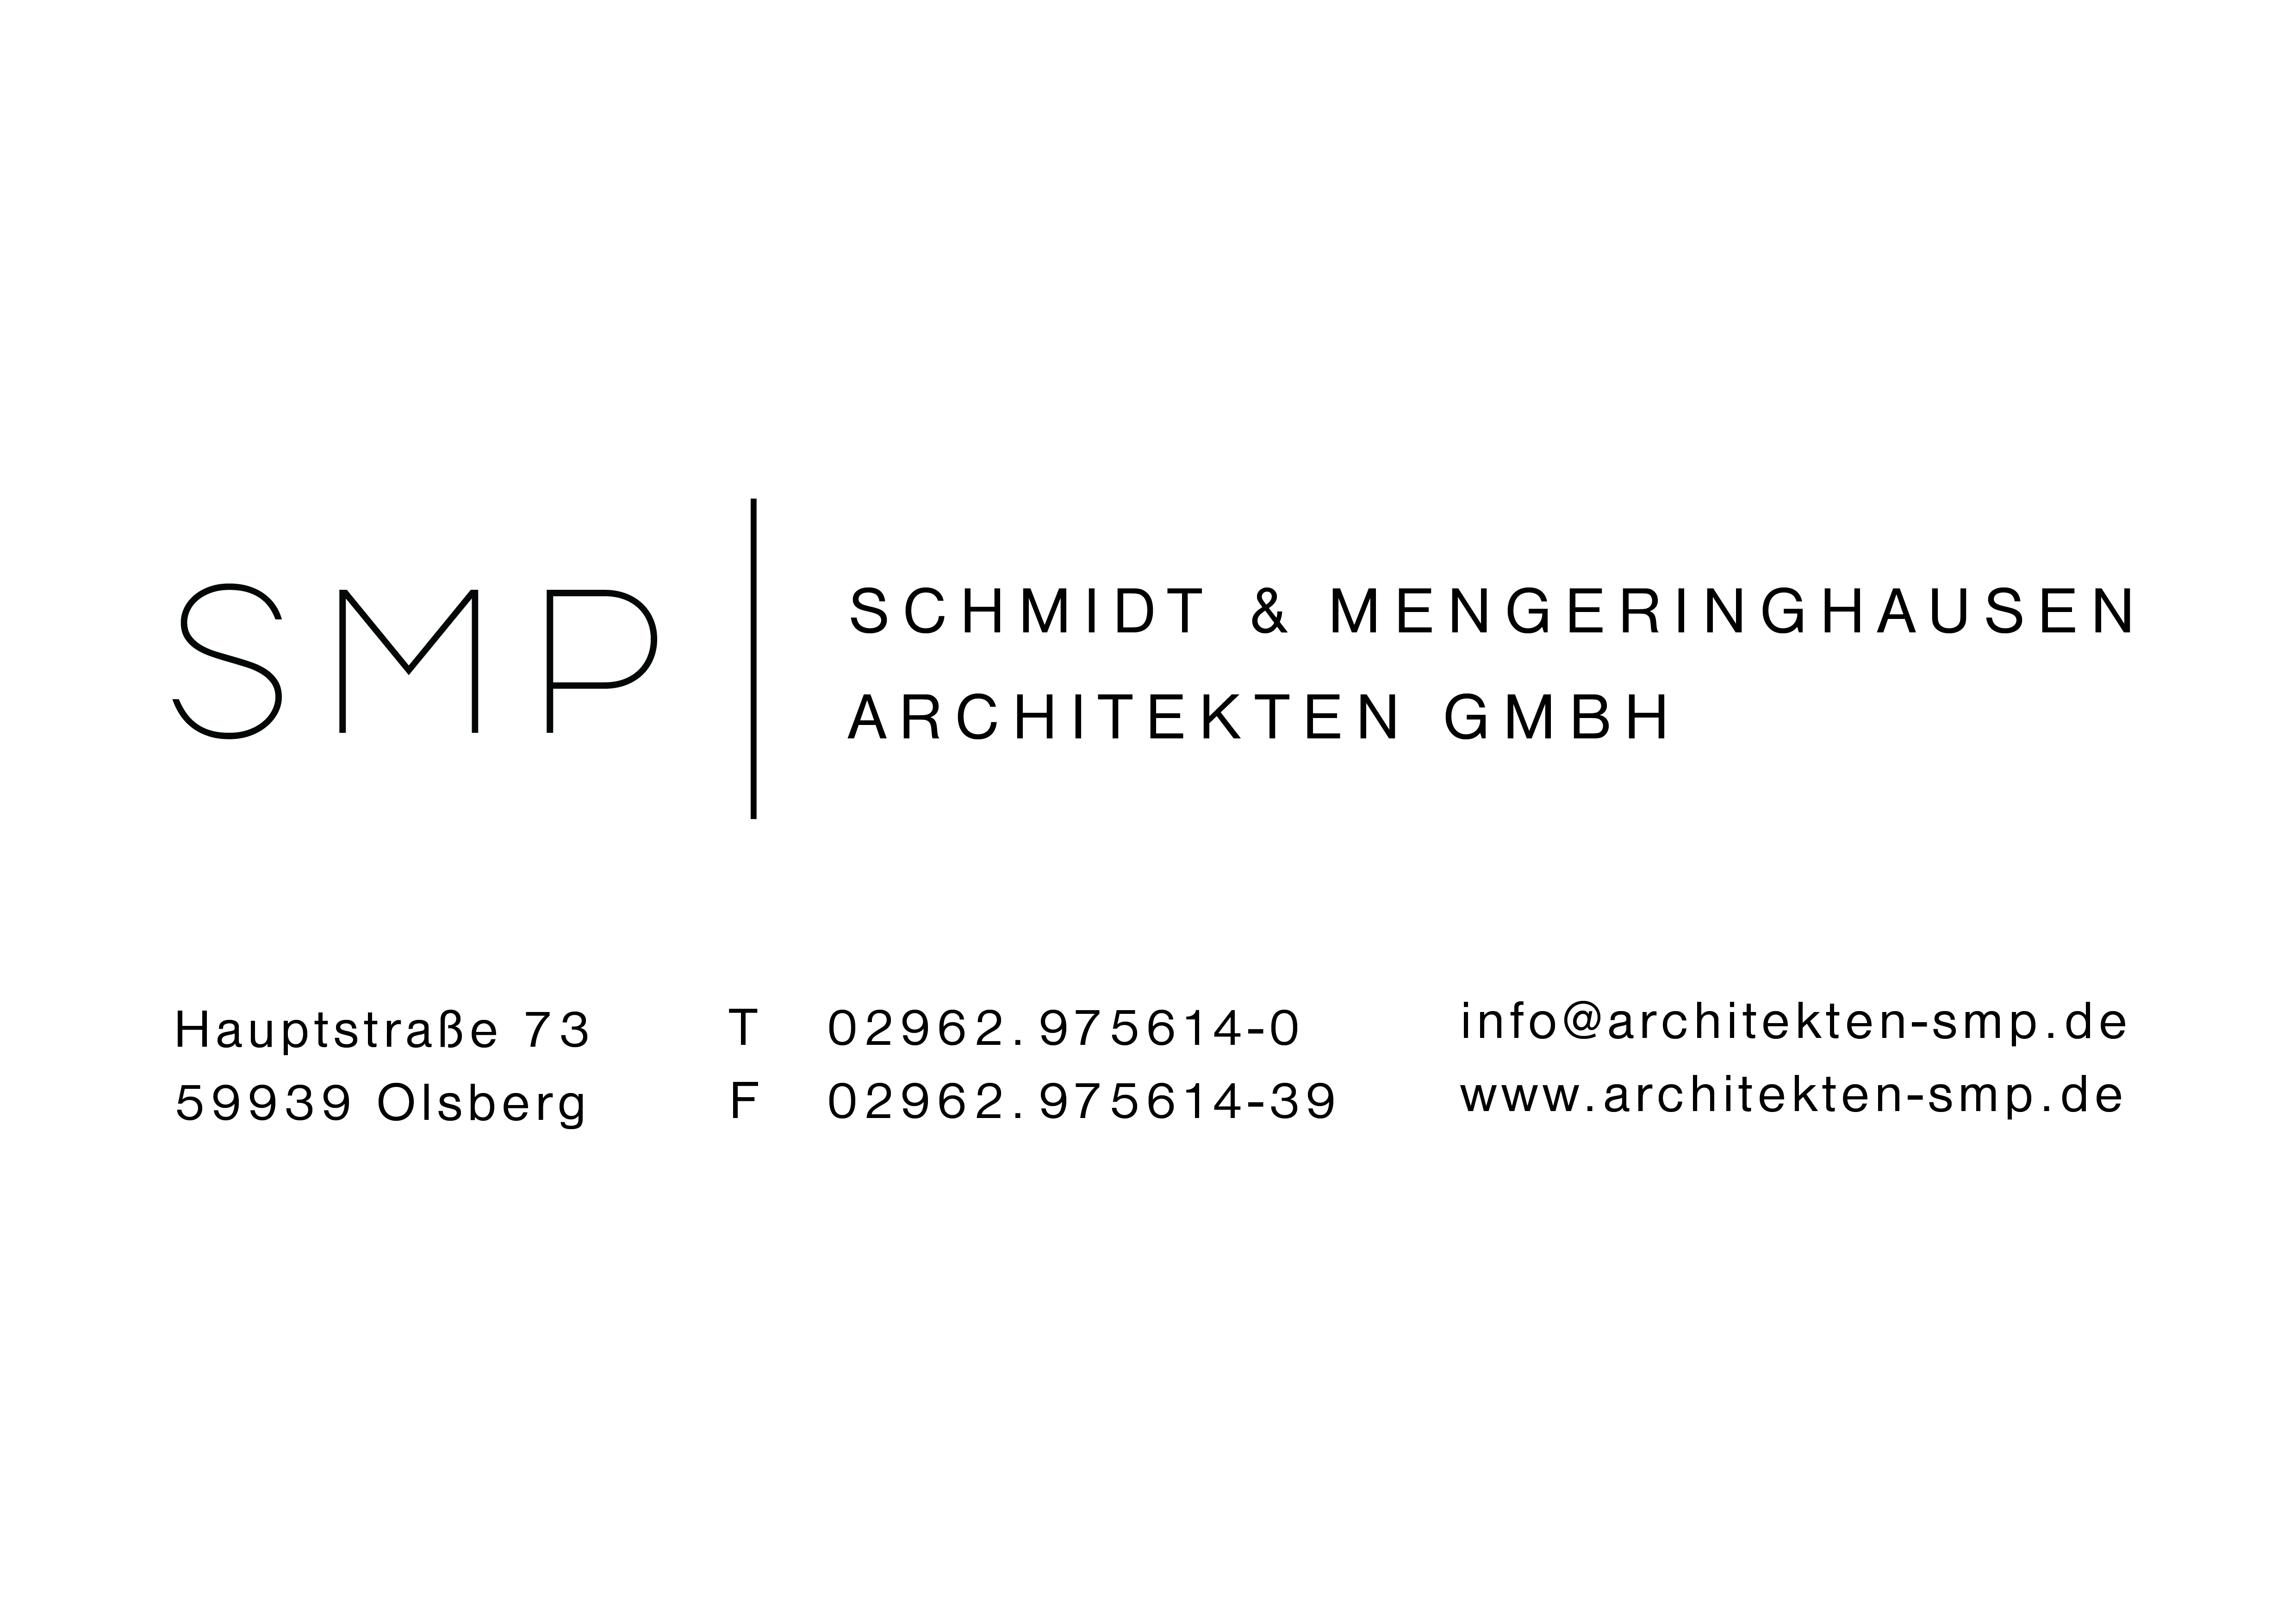 SMP Schmidt & Mengeringhausen Architekten GmbH